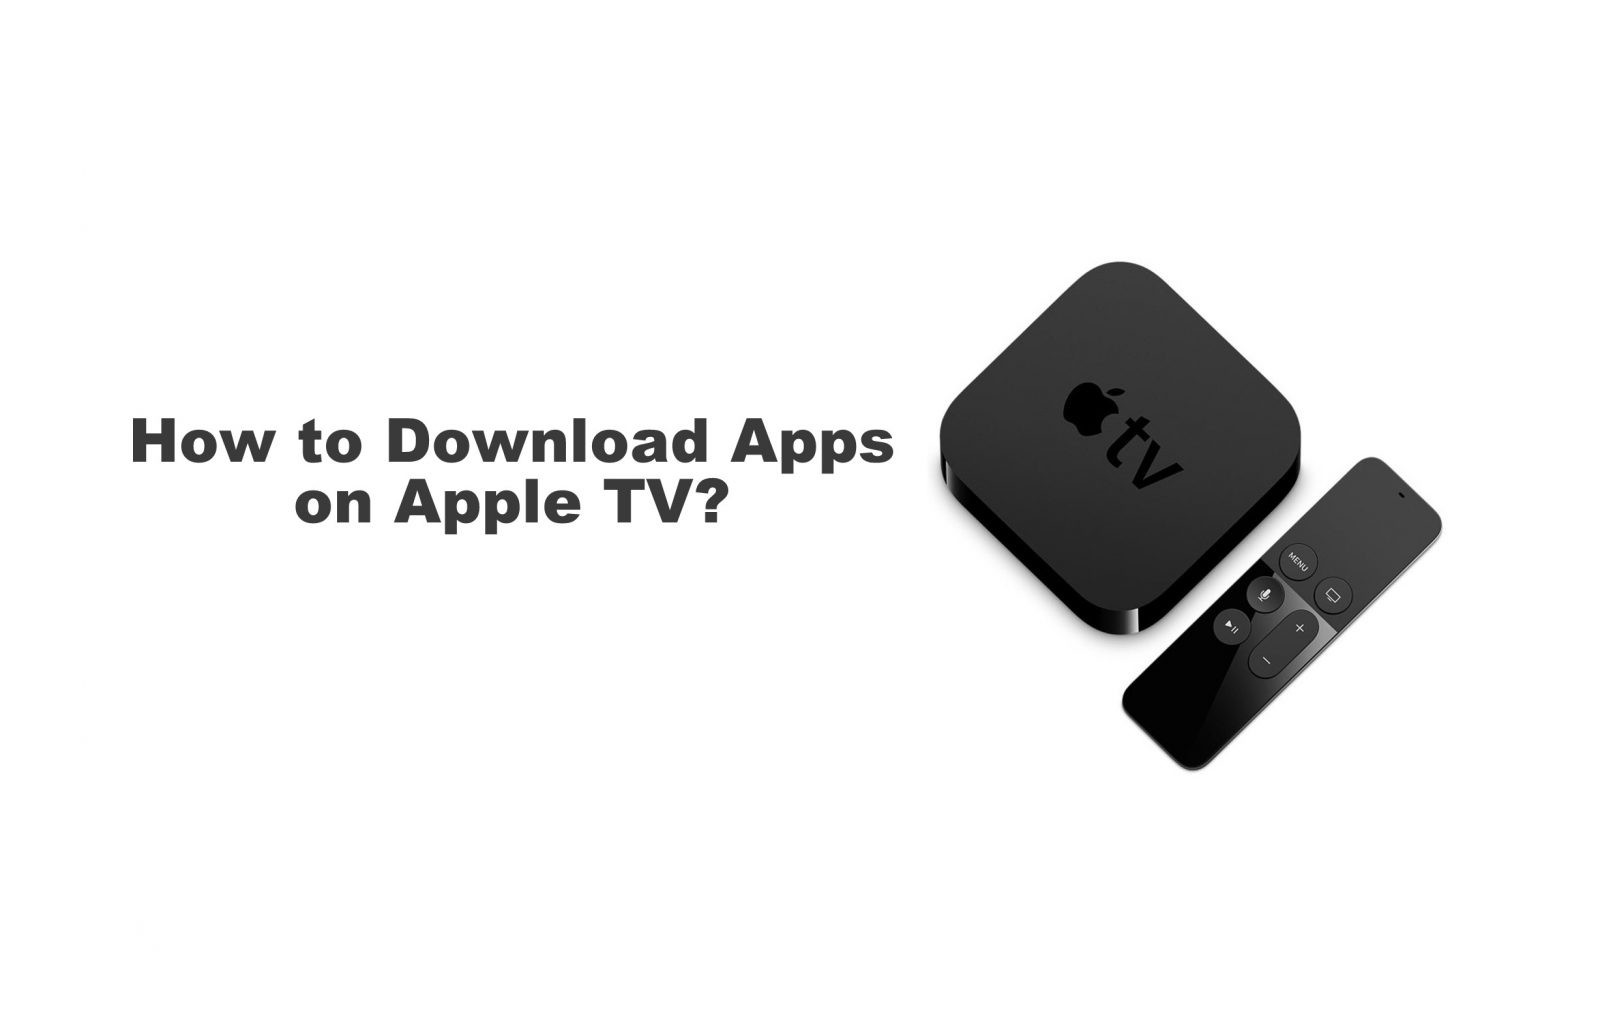 Download apps on Apple TV